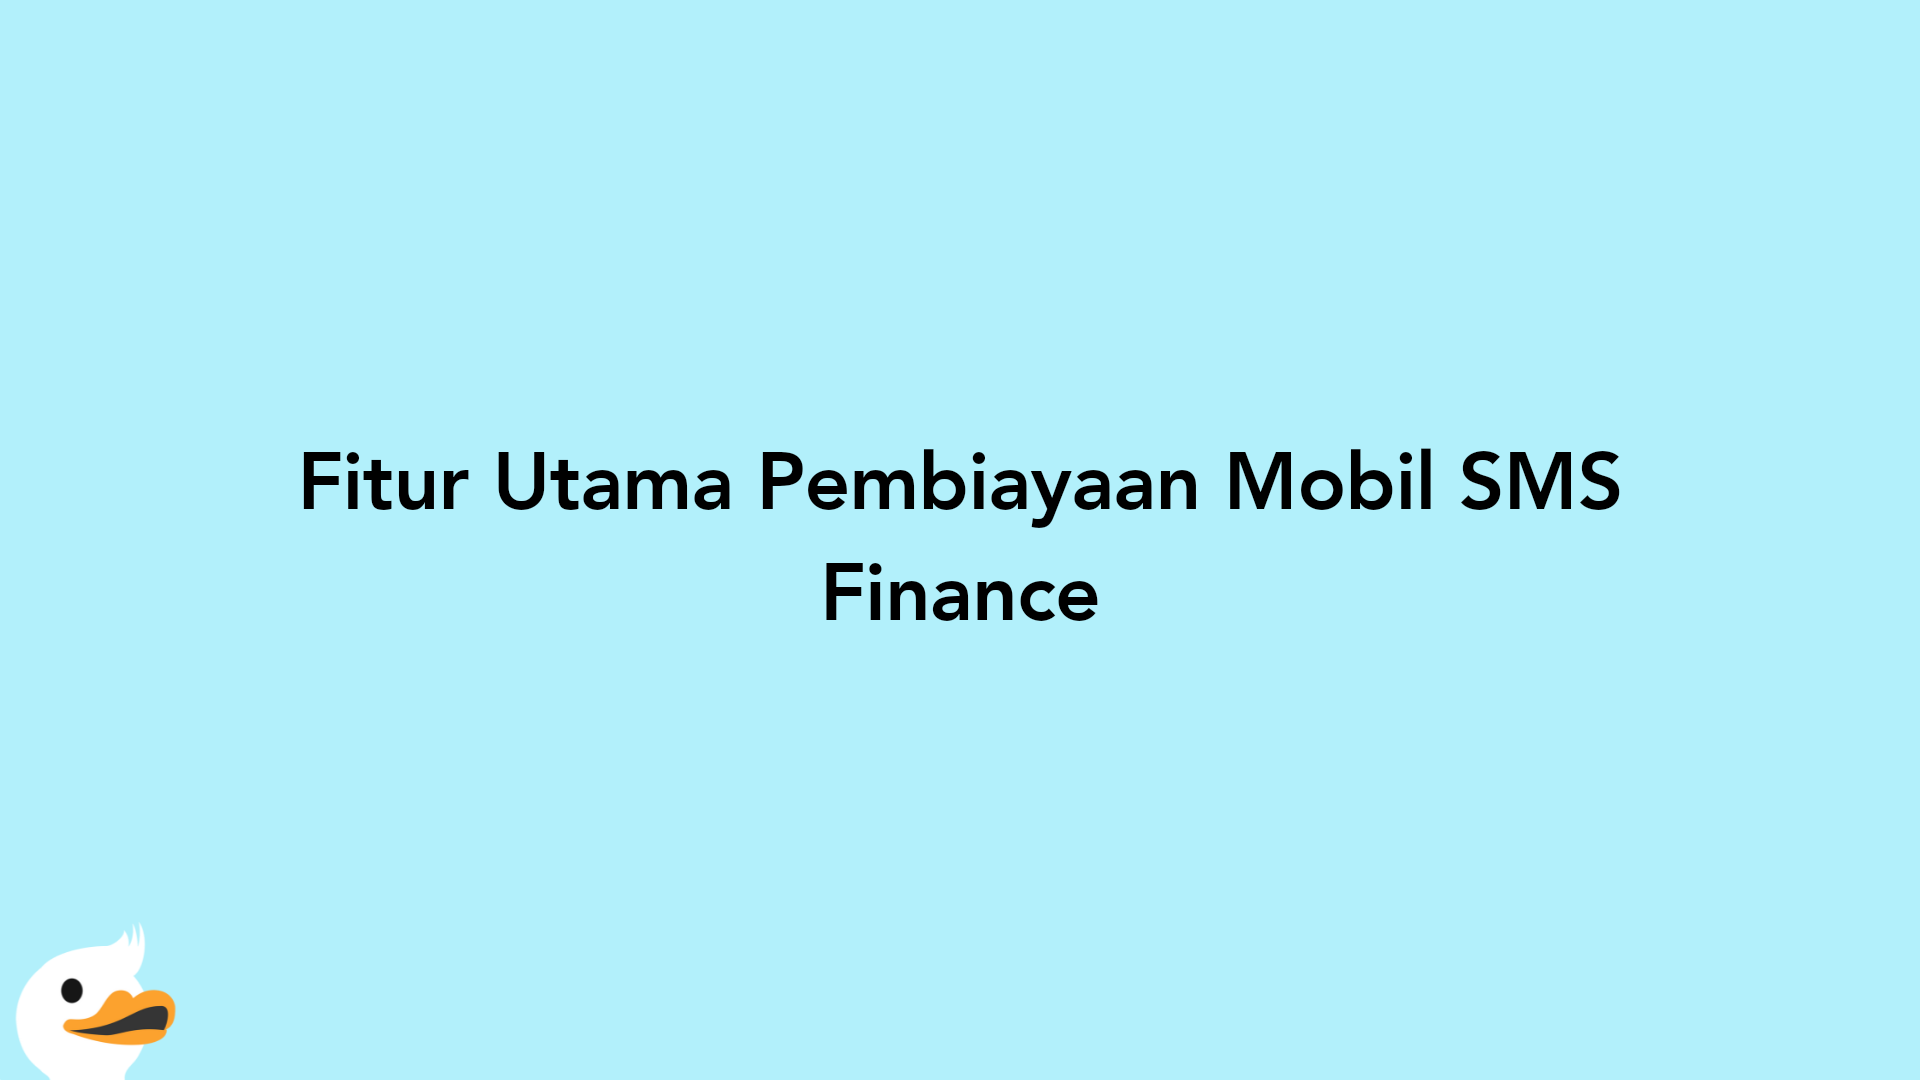 Fitur Utama Pembiayaan Mobil SMS Finance